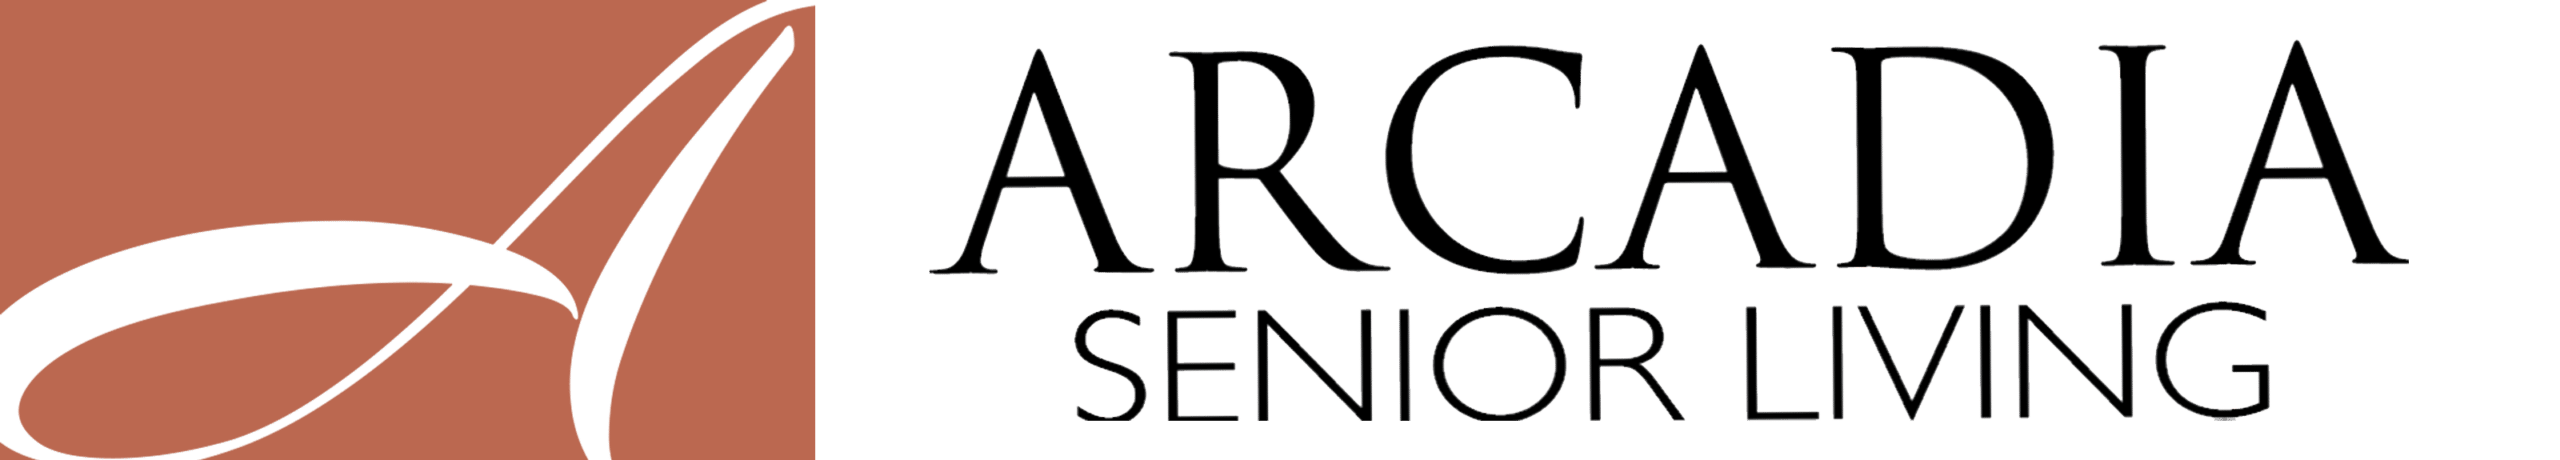 Arcadia Senior Living wide logo